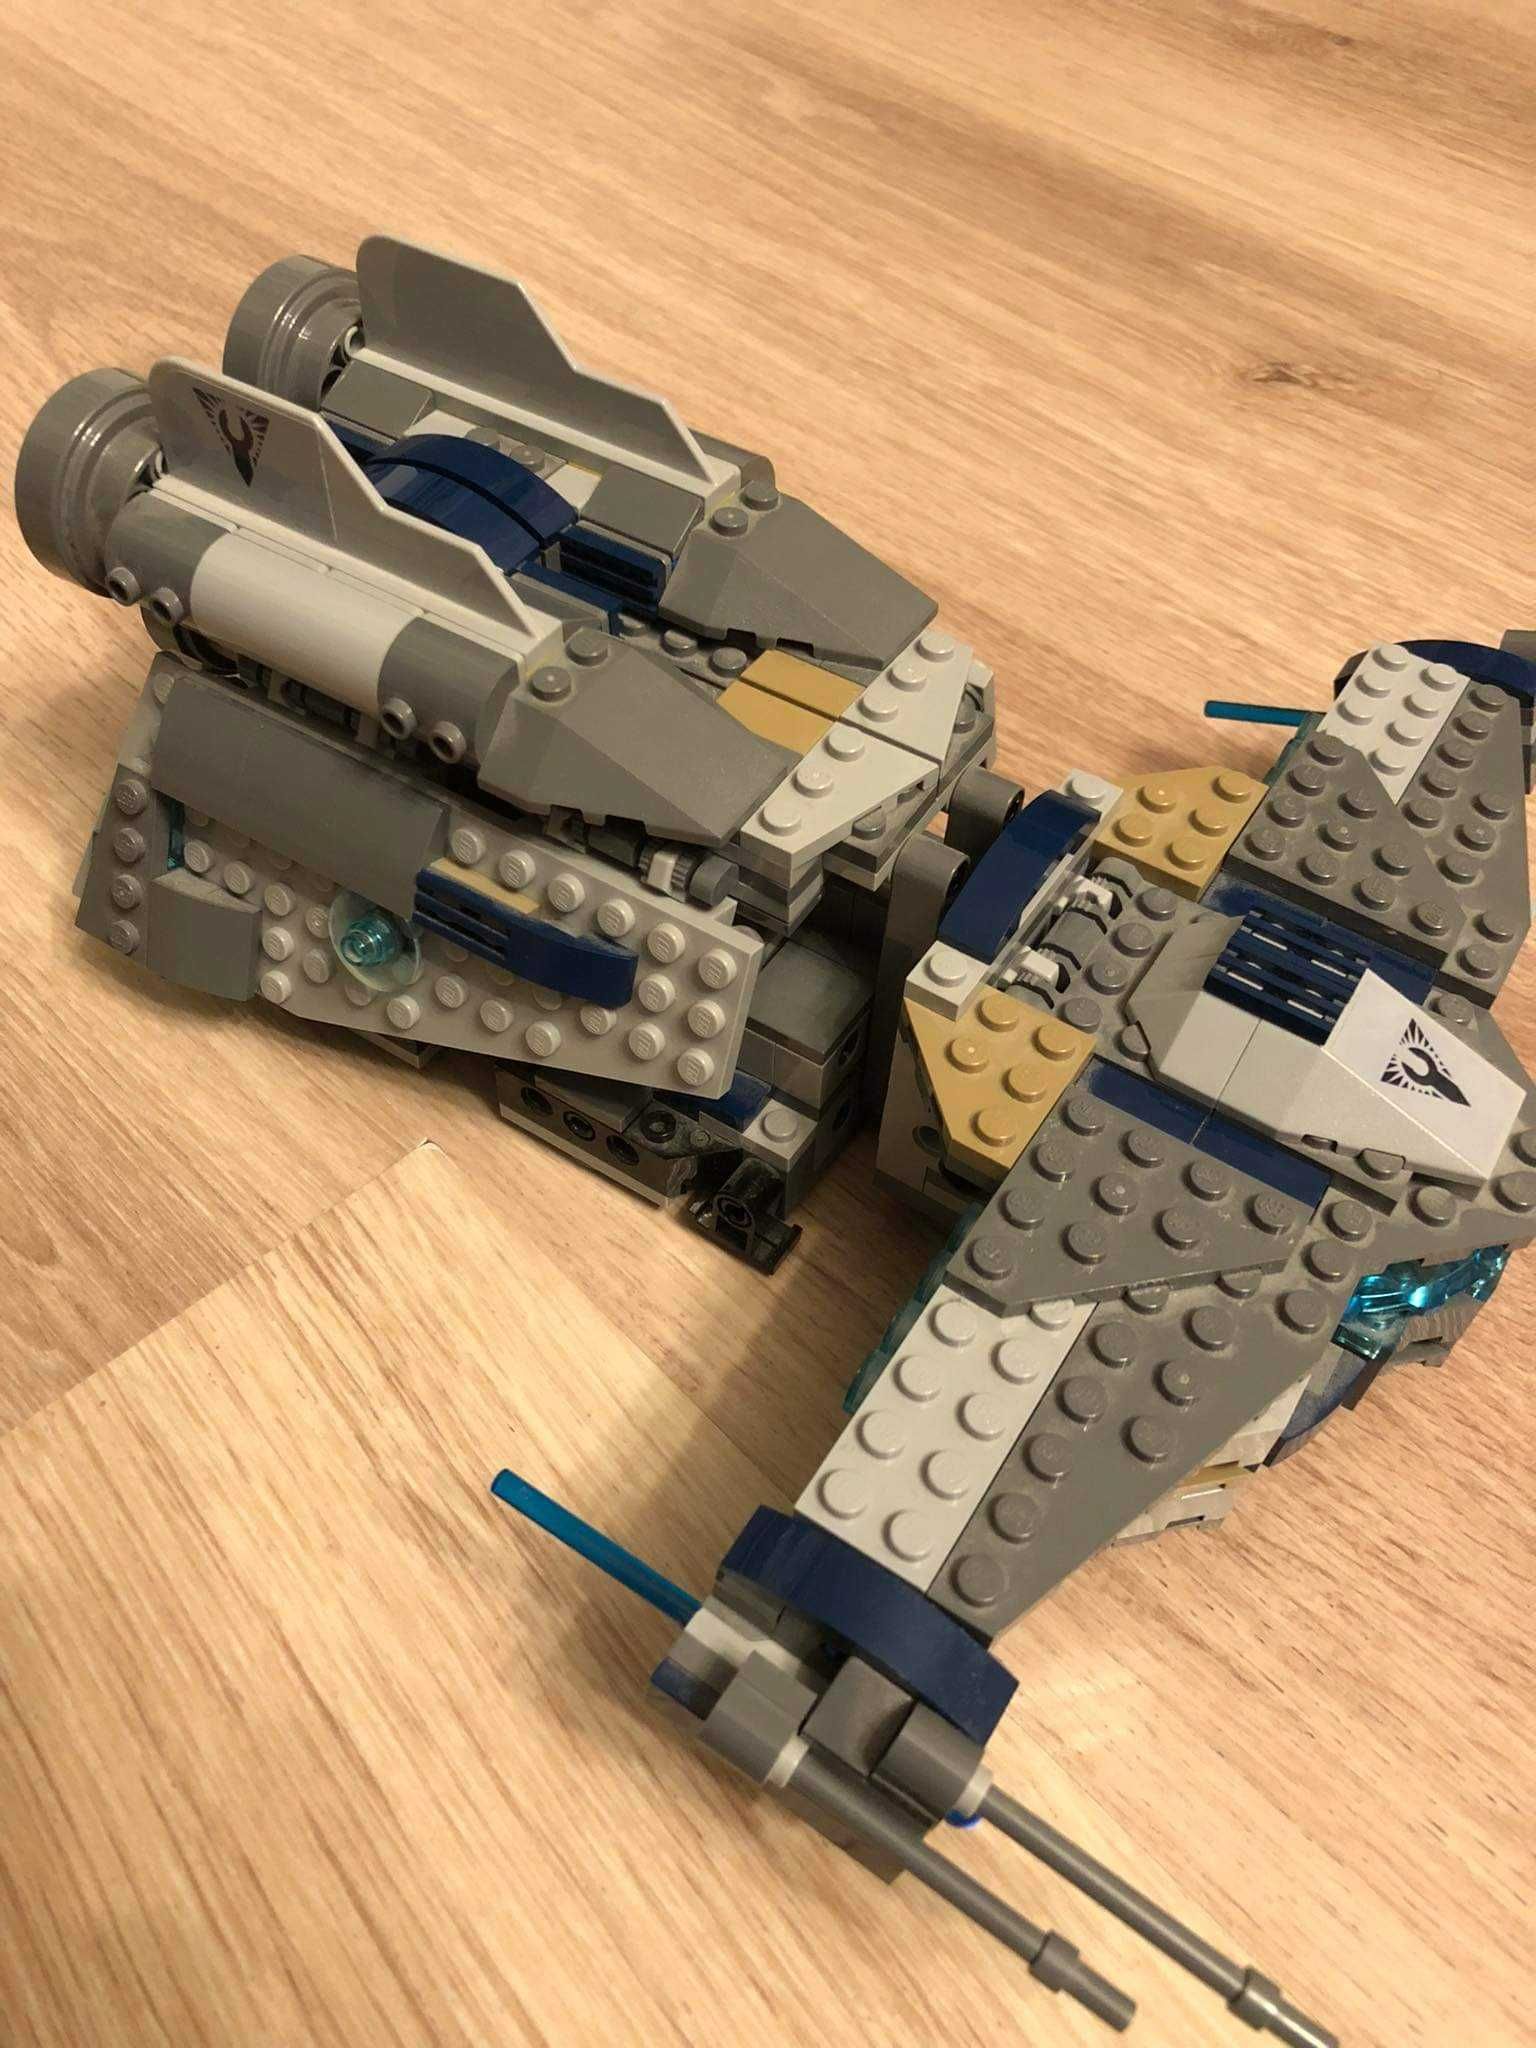 Lego Star Wars - statek FreeMakerów